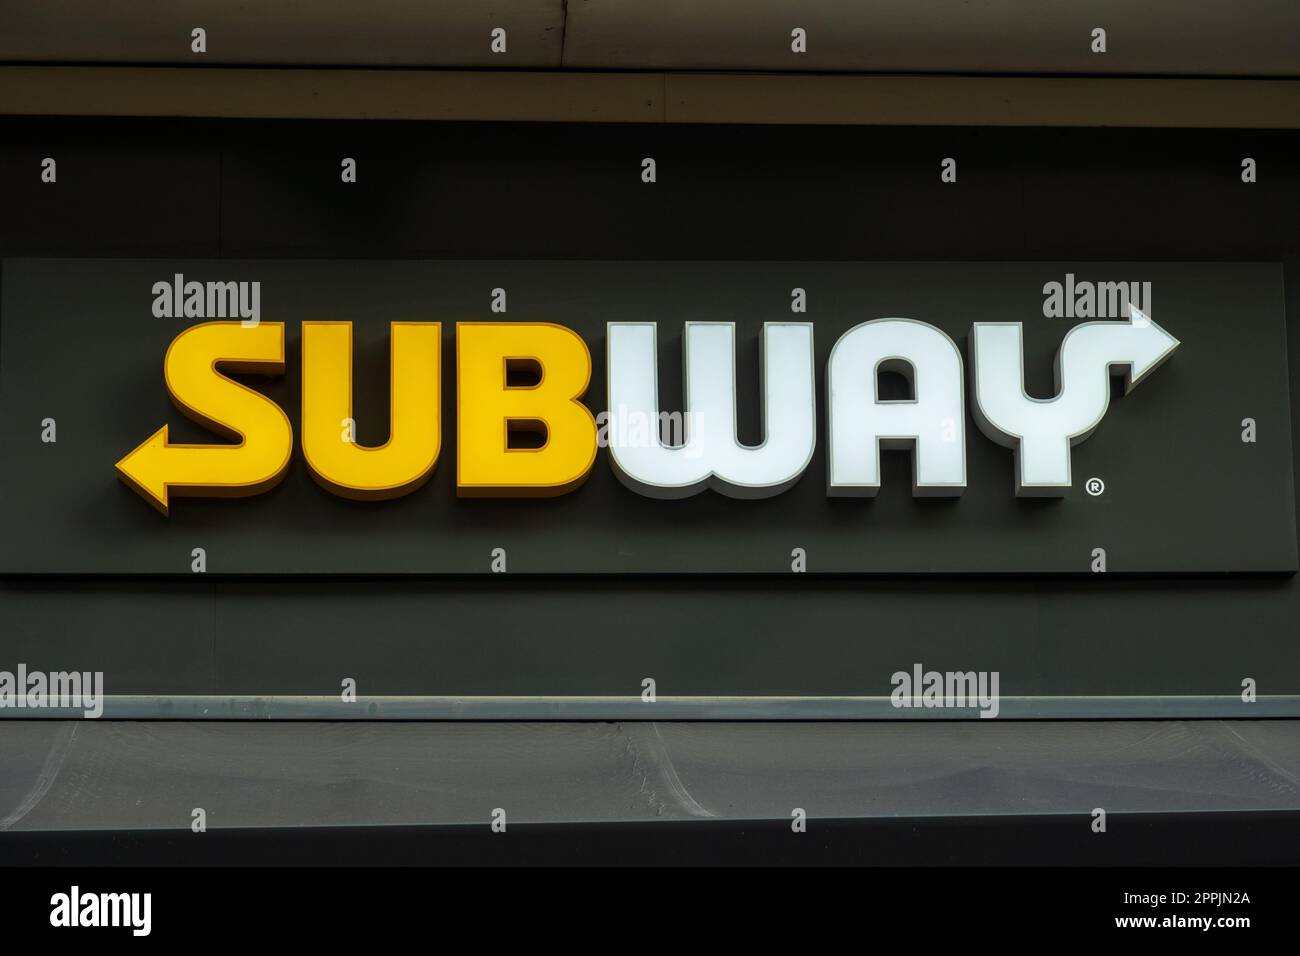 Subway sign, American fast food restaurant logo Stock Photo